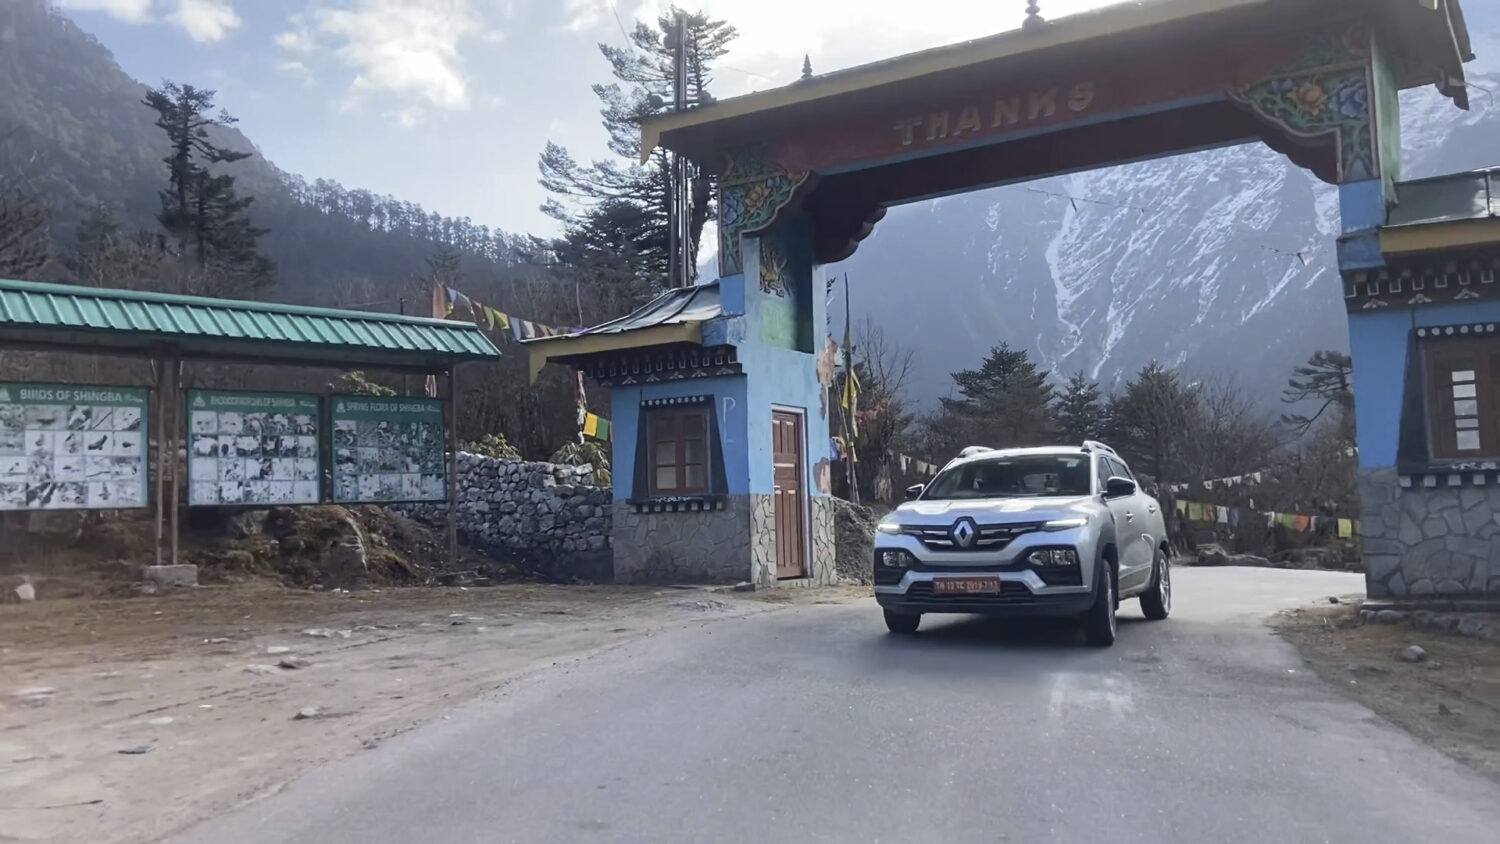 2021 - Story Renault Kiger, destination Himalaya